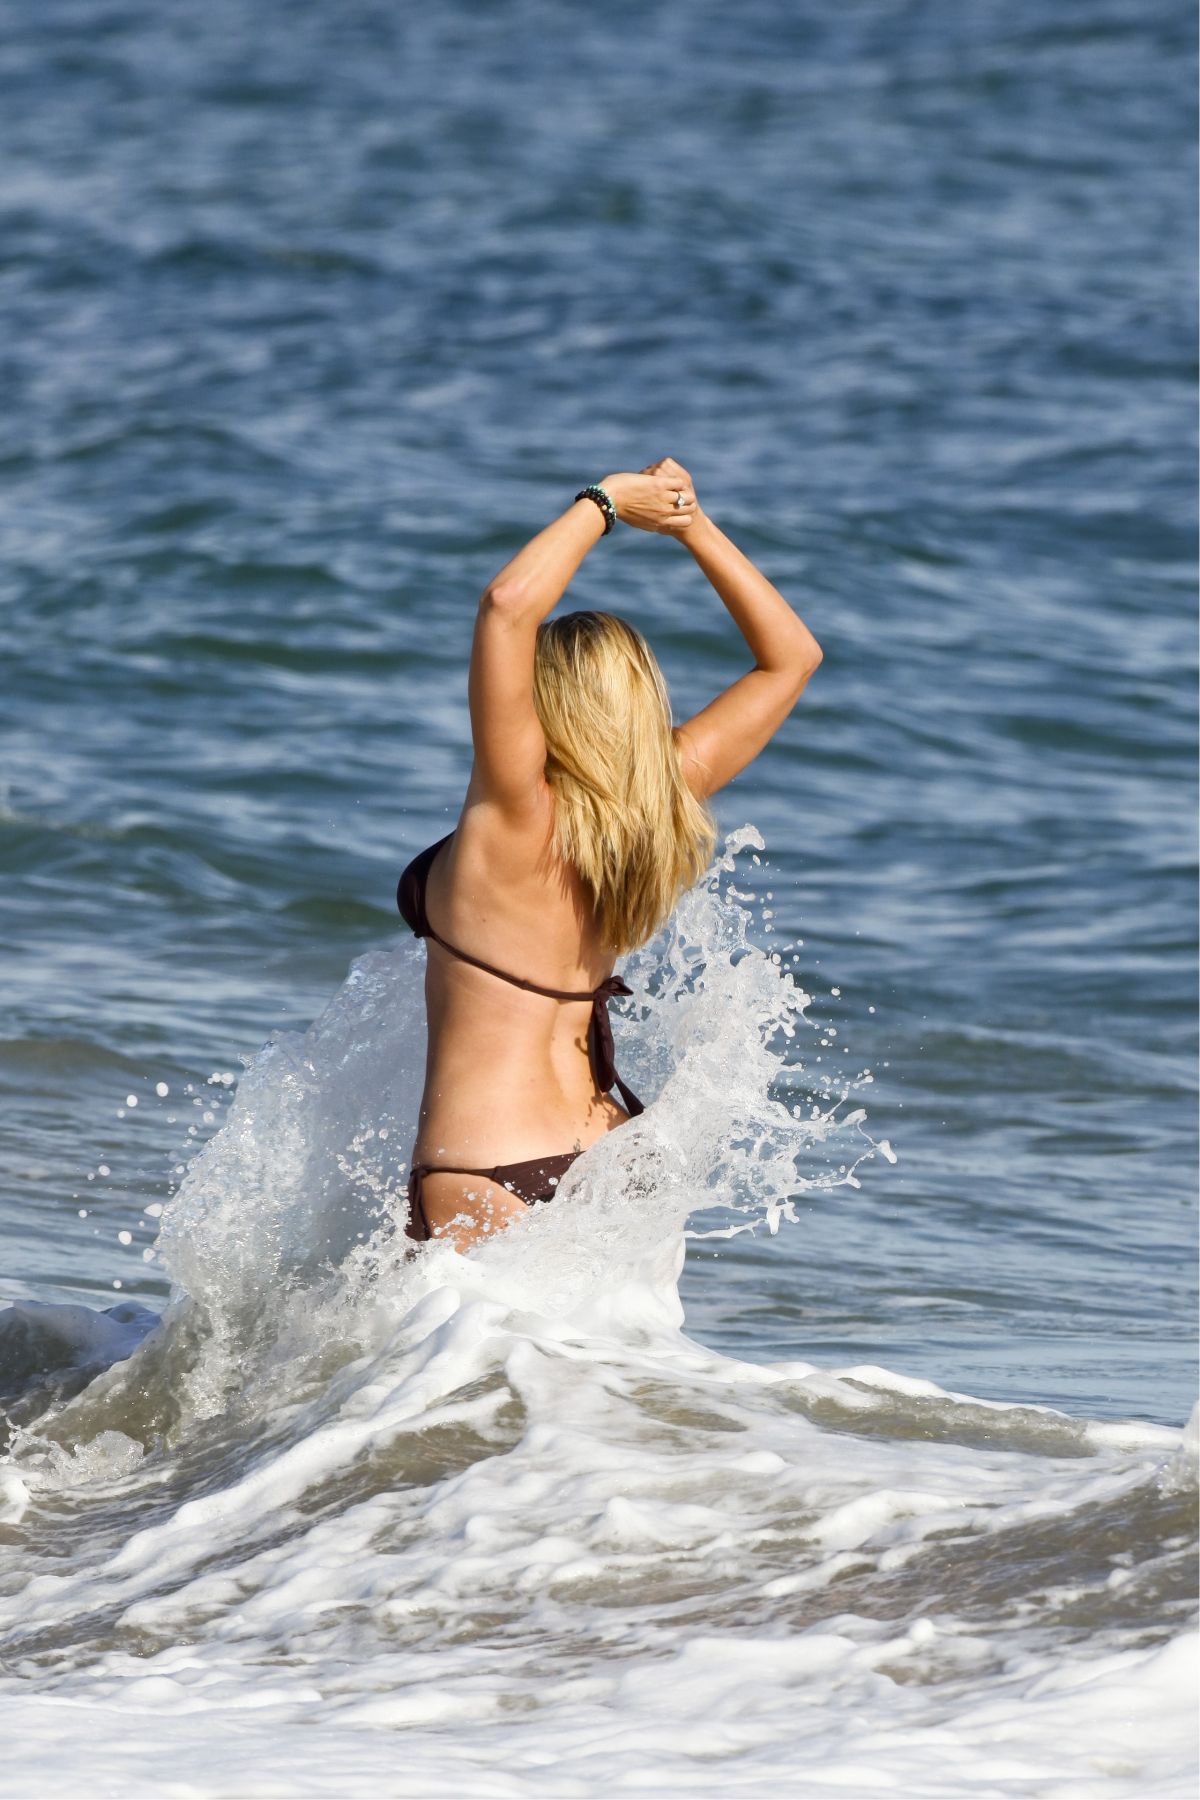 Best from the Past - NATASHA HENSTRIDGE in Bikini at a Beach